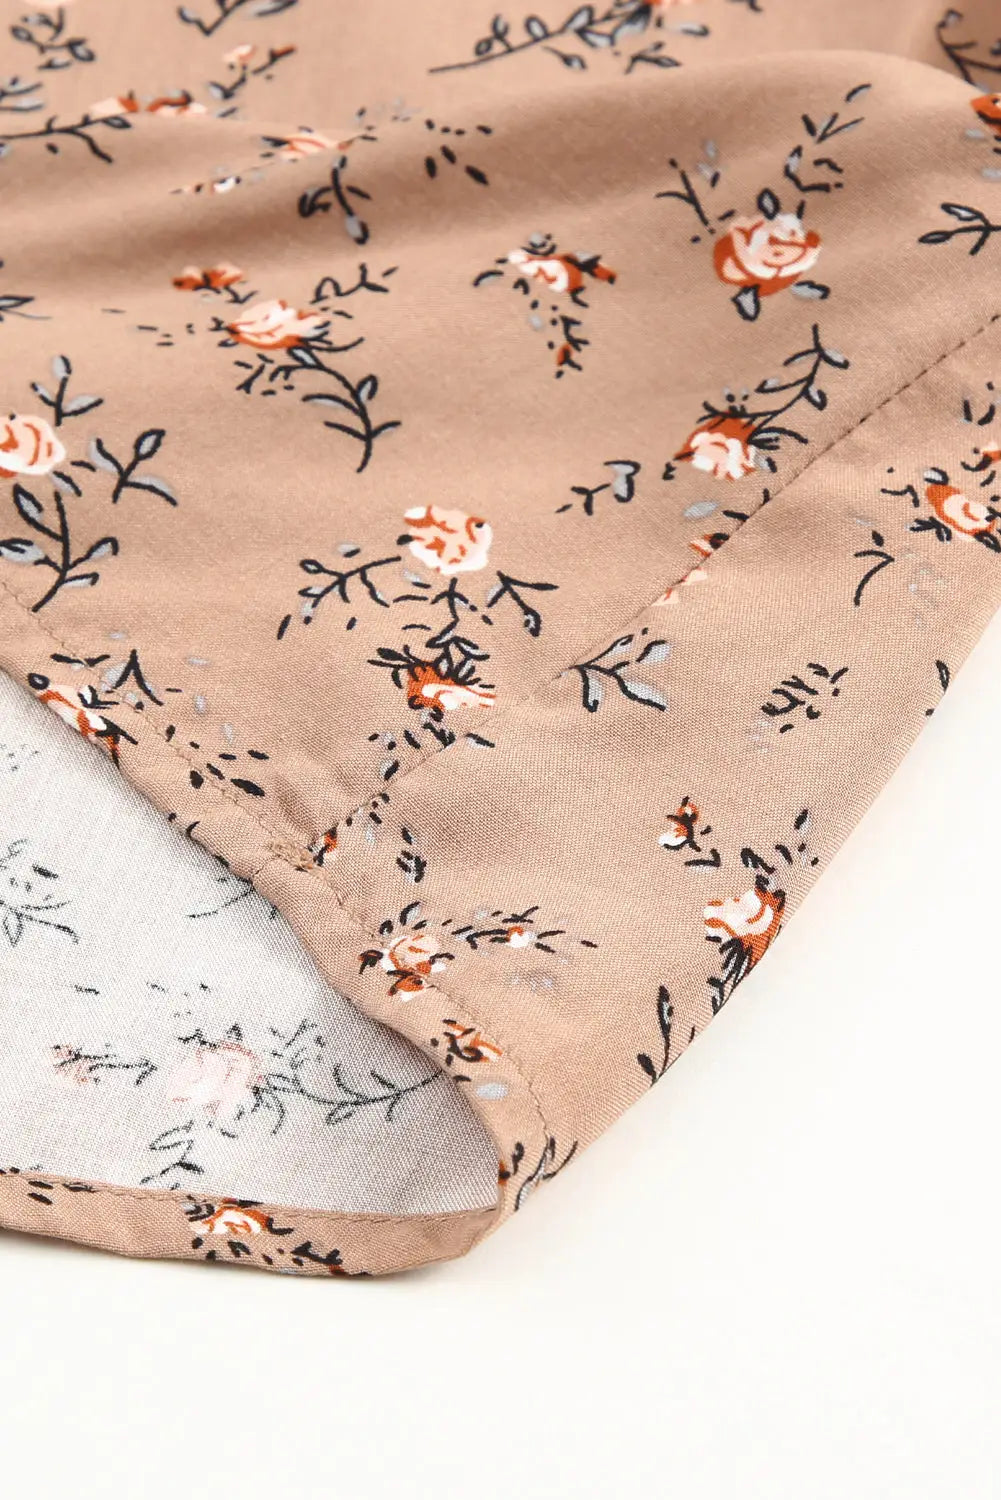 Khaki floral print smocked flounce sleeveless top - tank tops